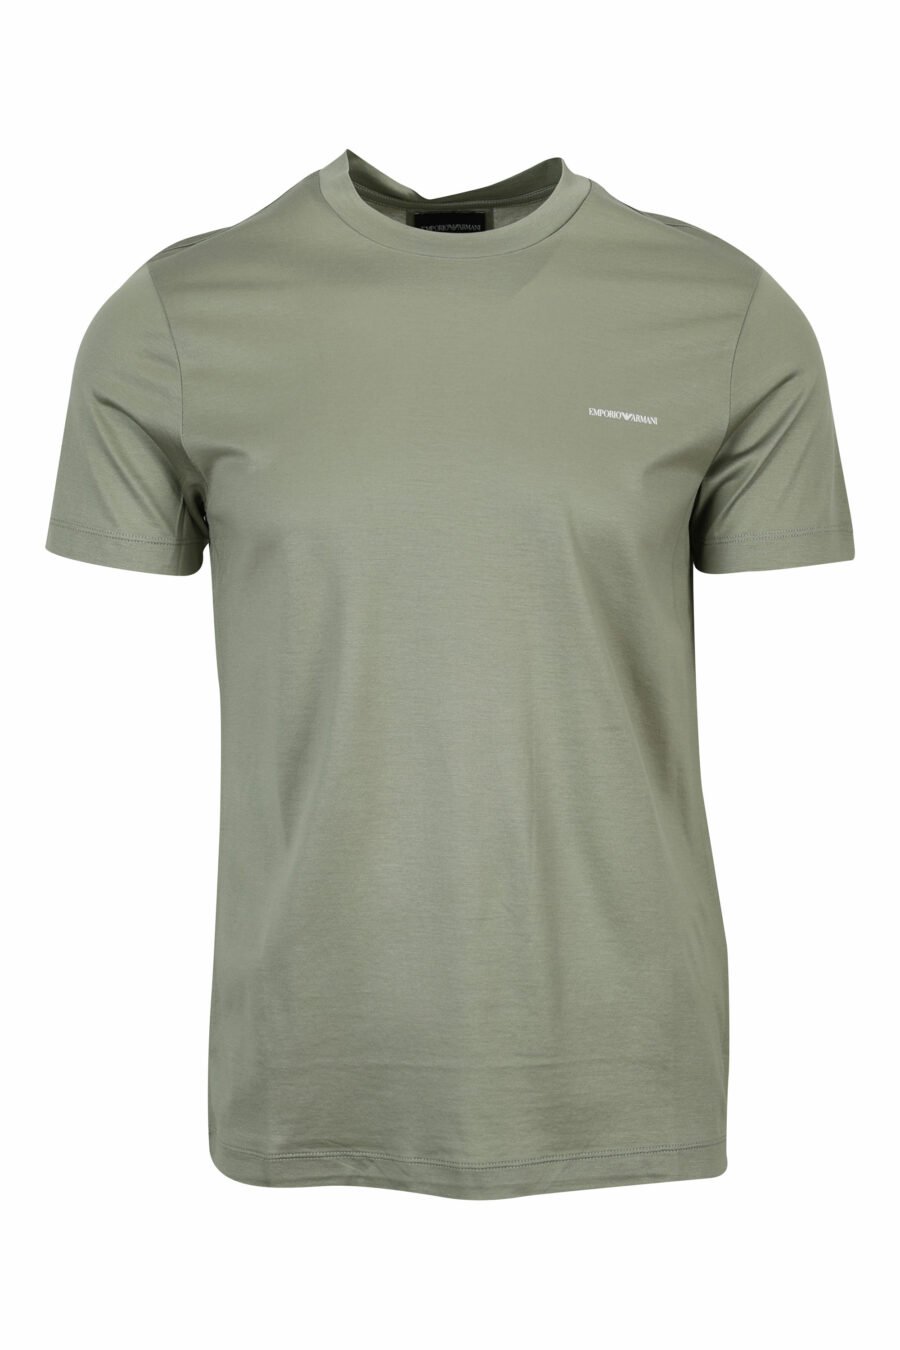 Camiseta verde oliva con minilogo blanco - 8057767092771